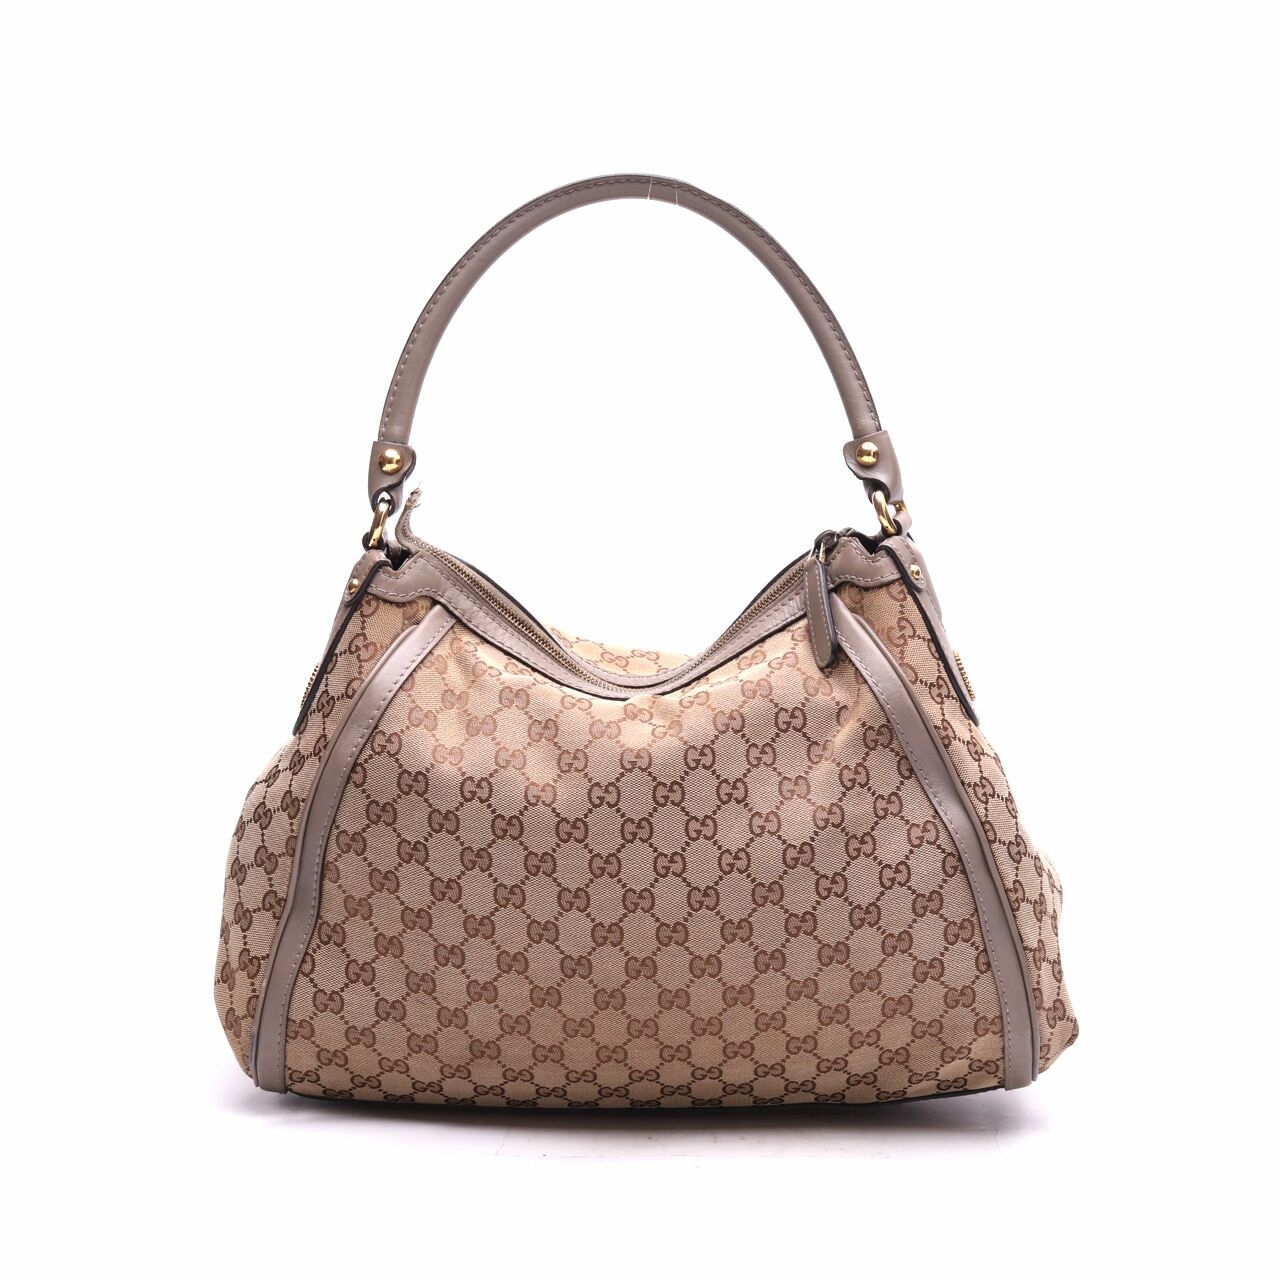  Gucci Beige/Grey Guccissima Leather Scarlett Hobo Shoulder Bag